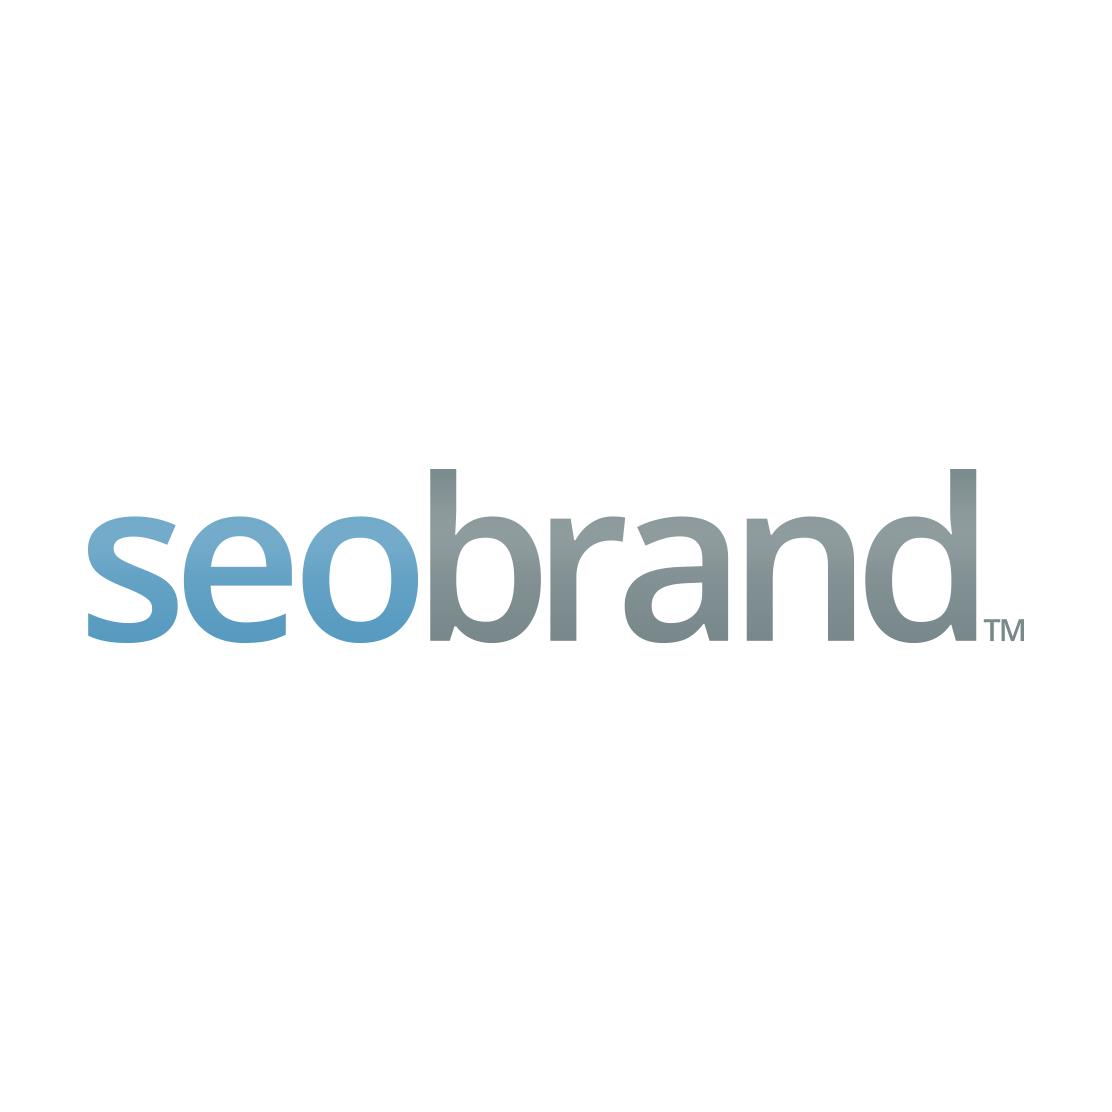 Best SMM Business Logo: SEO Brand